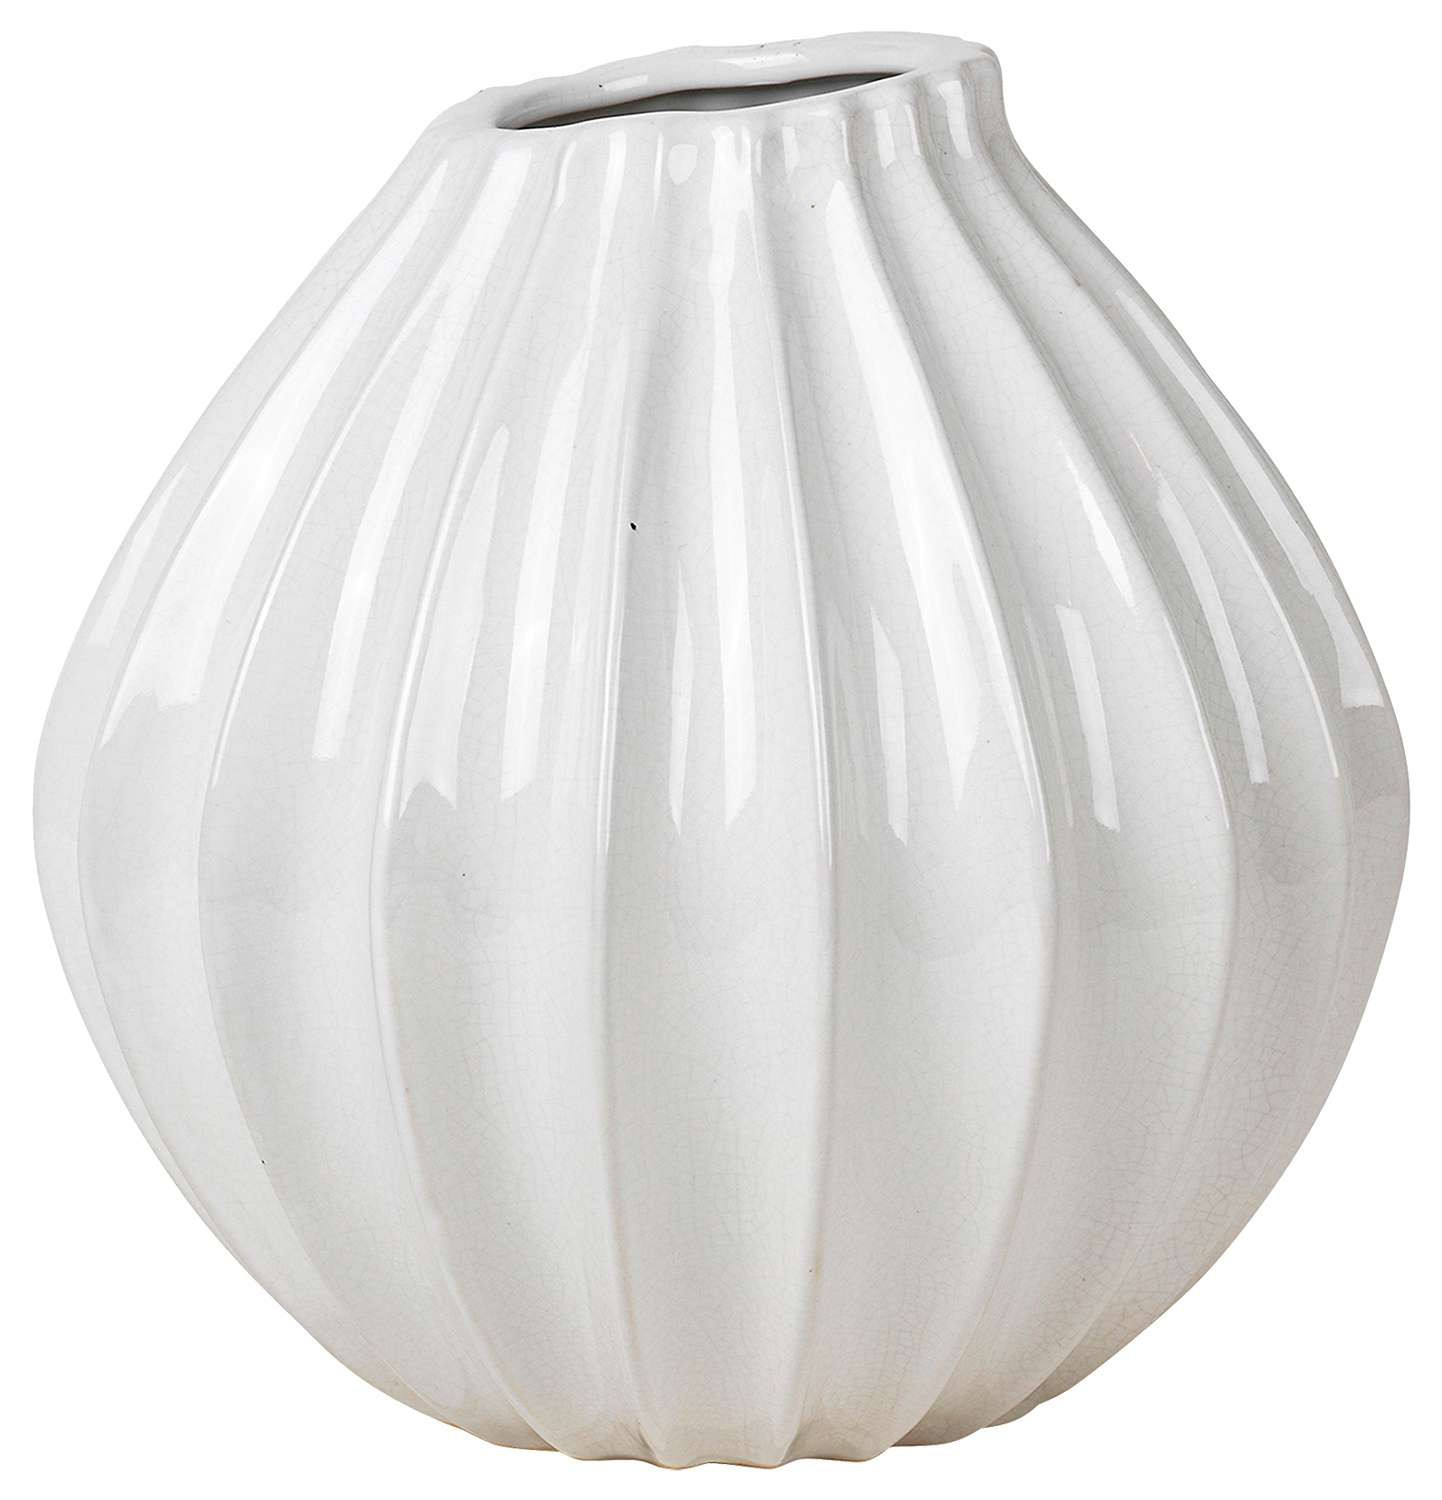 20 Perfect Black Ceramic Vase 2024 free download black ceramic vase of broste copenhagen wide vase height 25 cm scandinavian lifestyle regarding 5710688149643 bilder 1280x12802x